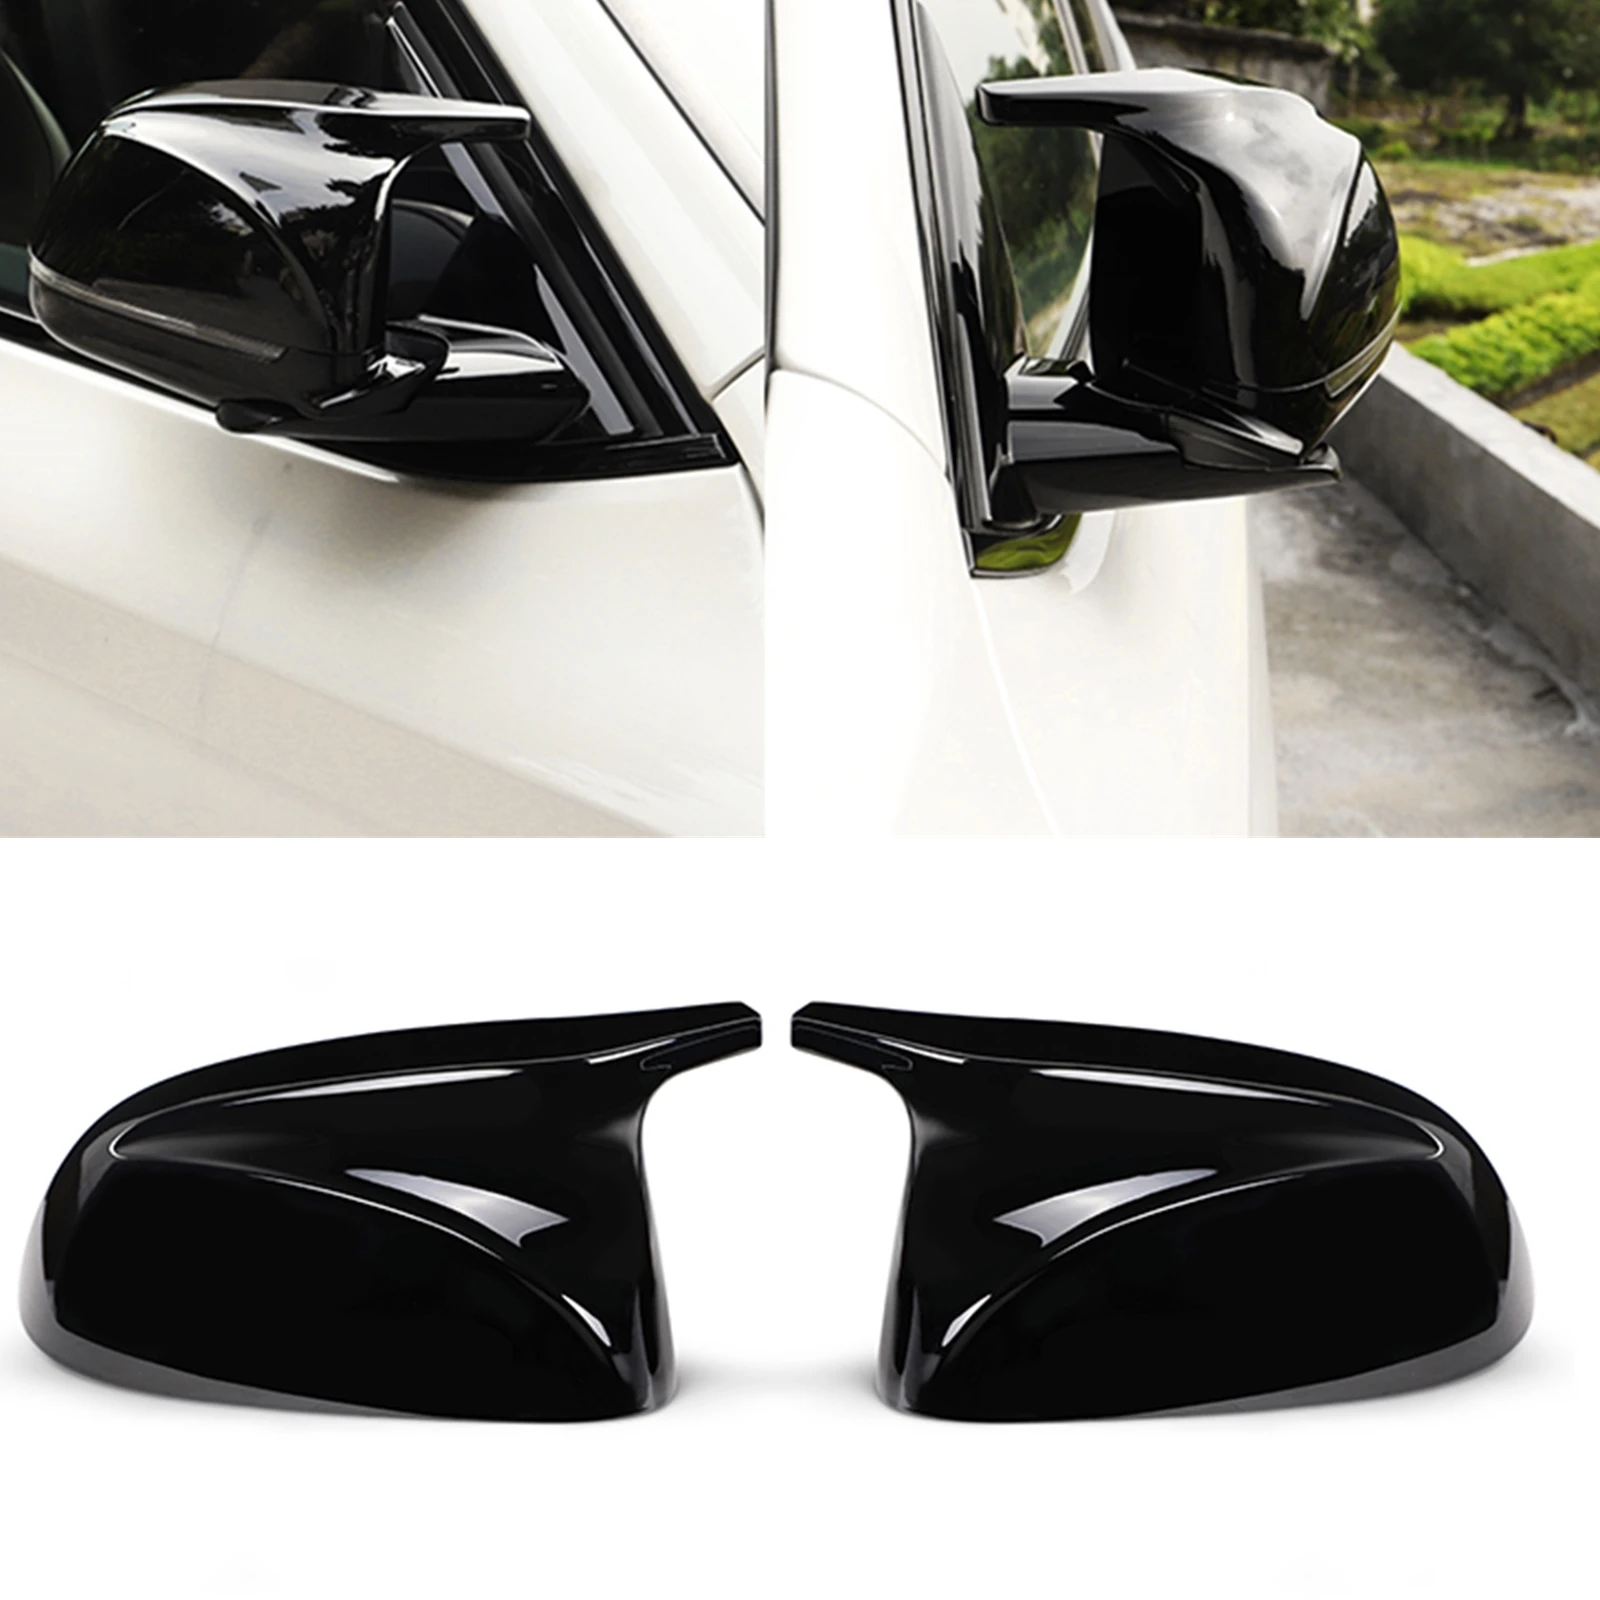 

Чехол на зеркало для BMW X3, X4, X5, X6, X7, G03, G05, G06 2018-2021, сменная глянцевая черная внешняя крышка заднего вида автомобиля